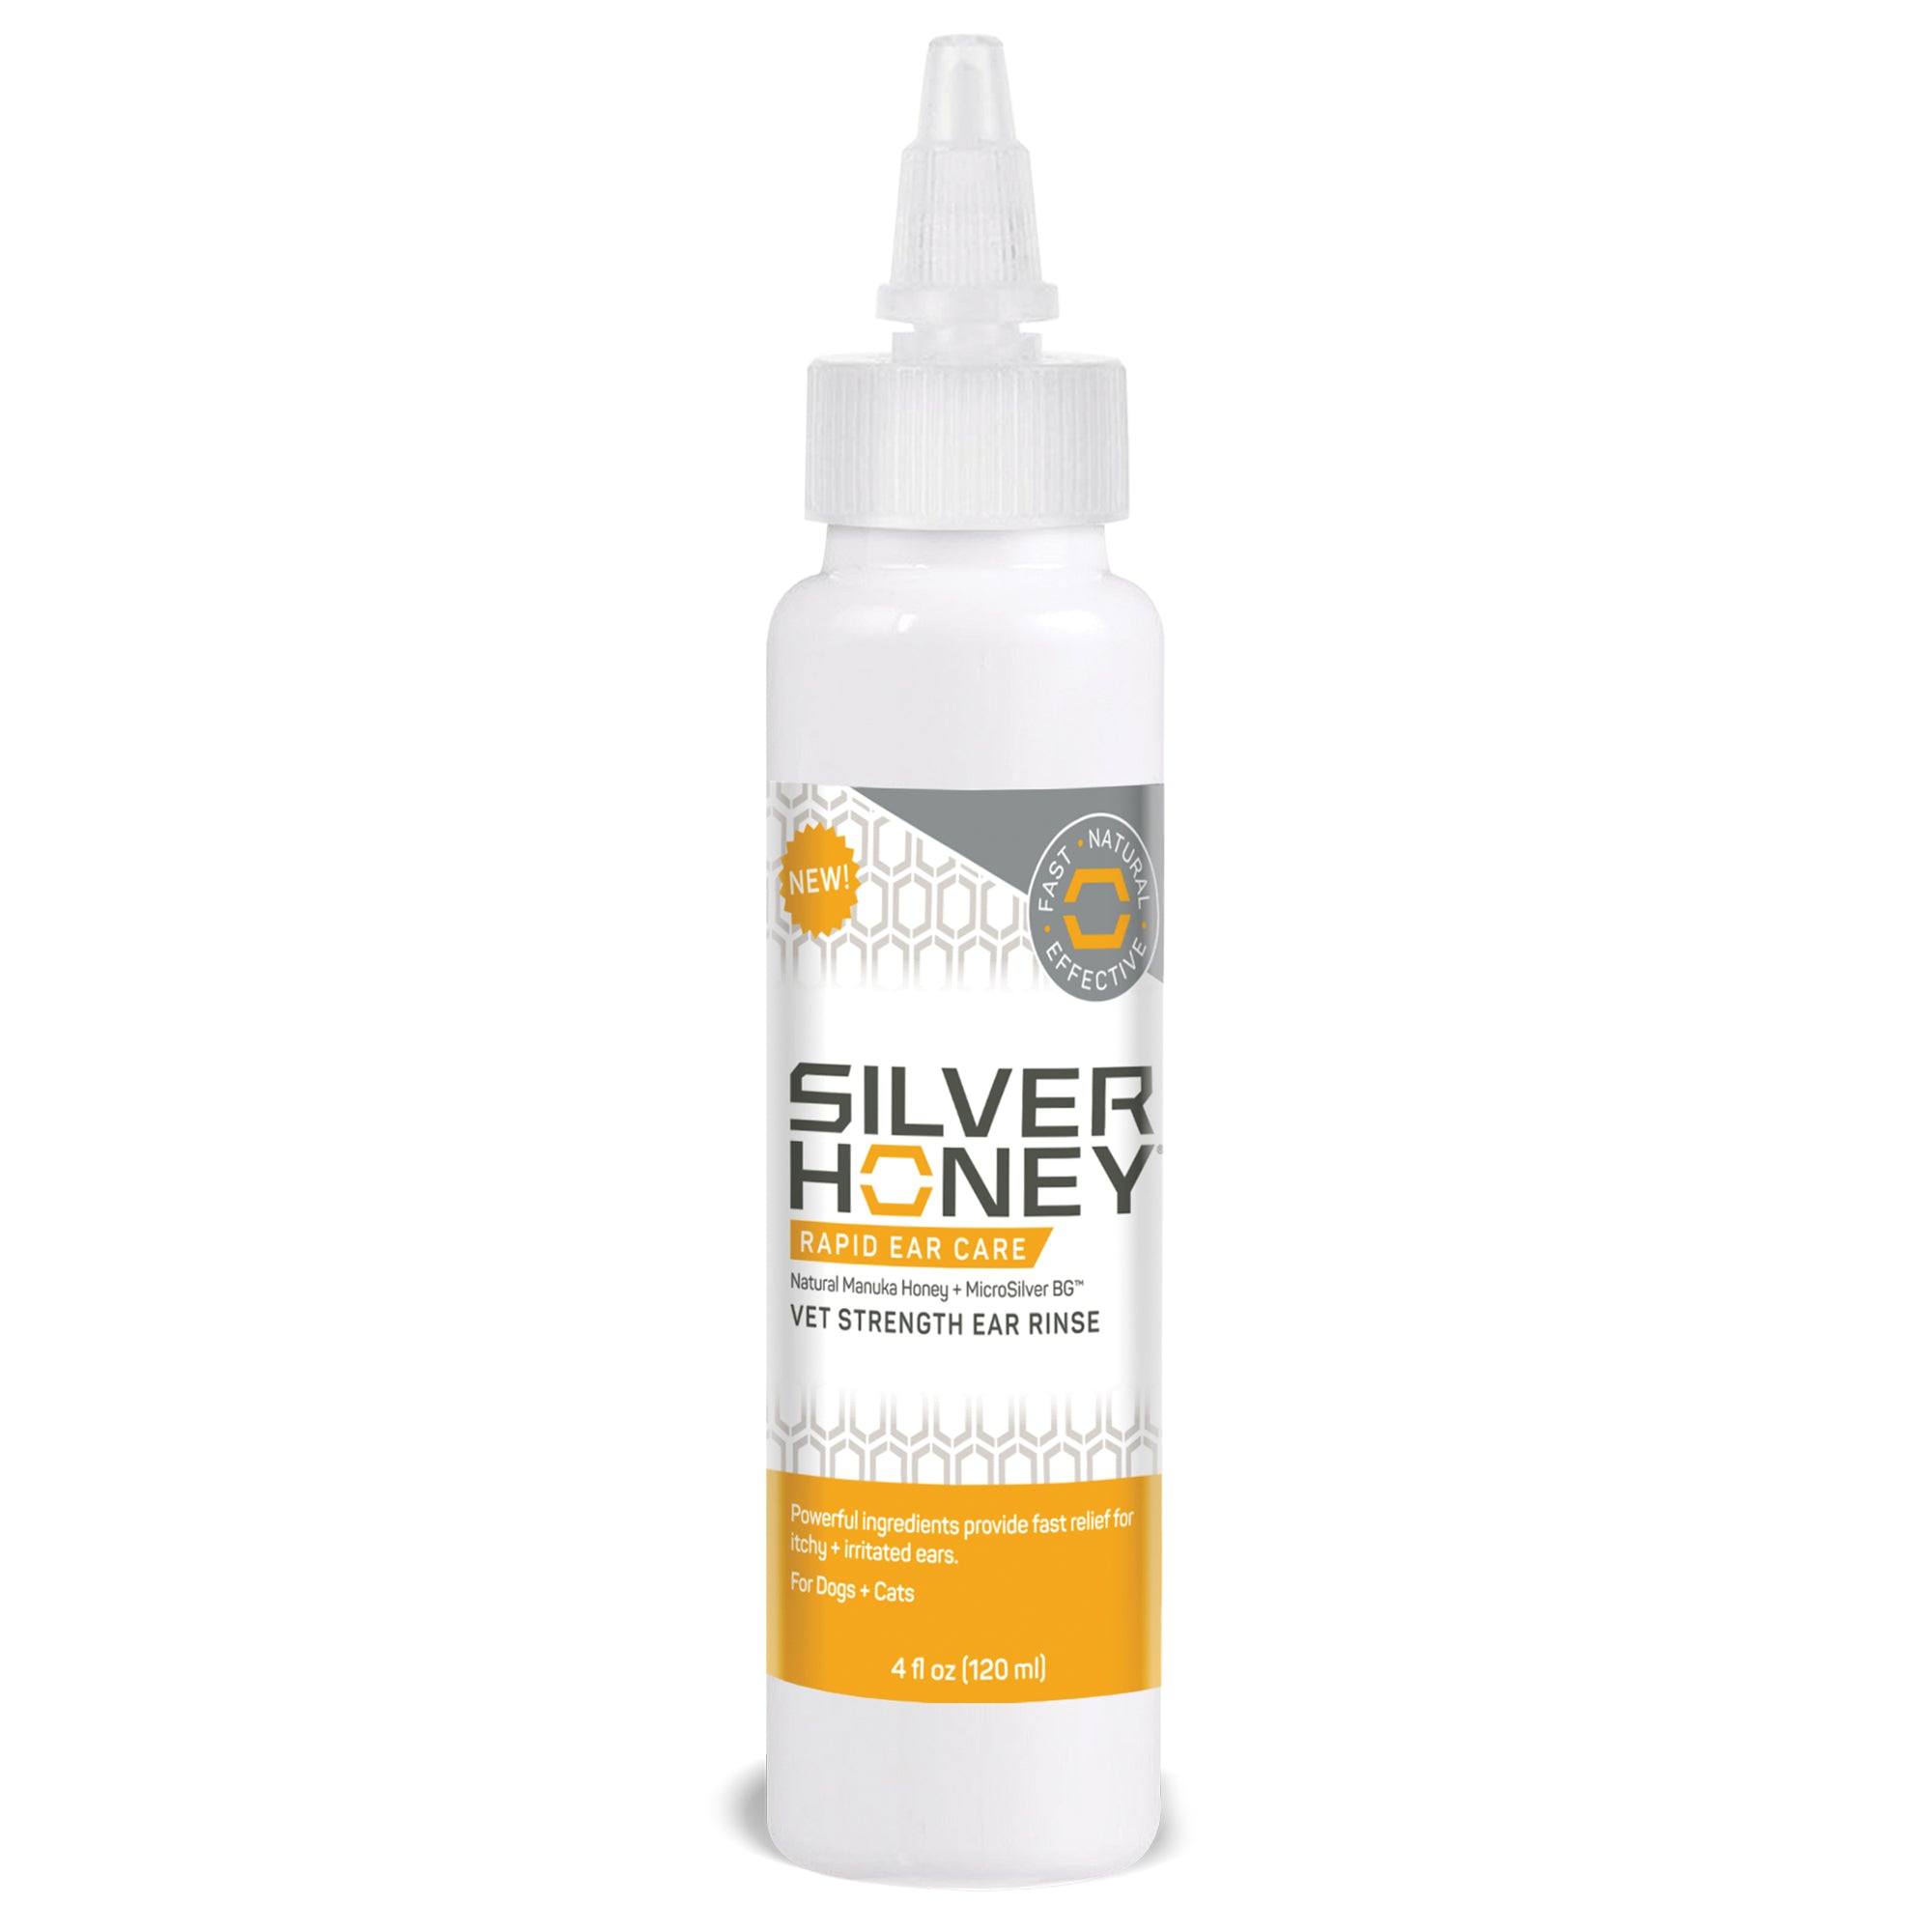 Silver Honey® Rapid Ear Care Vet Strength Ear Rinse Ear Care absorbine   